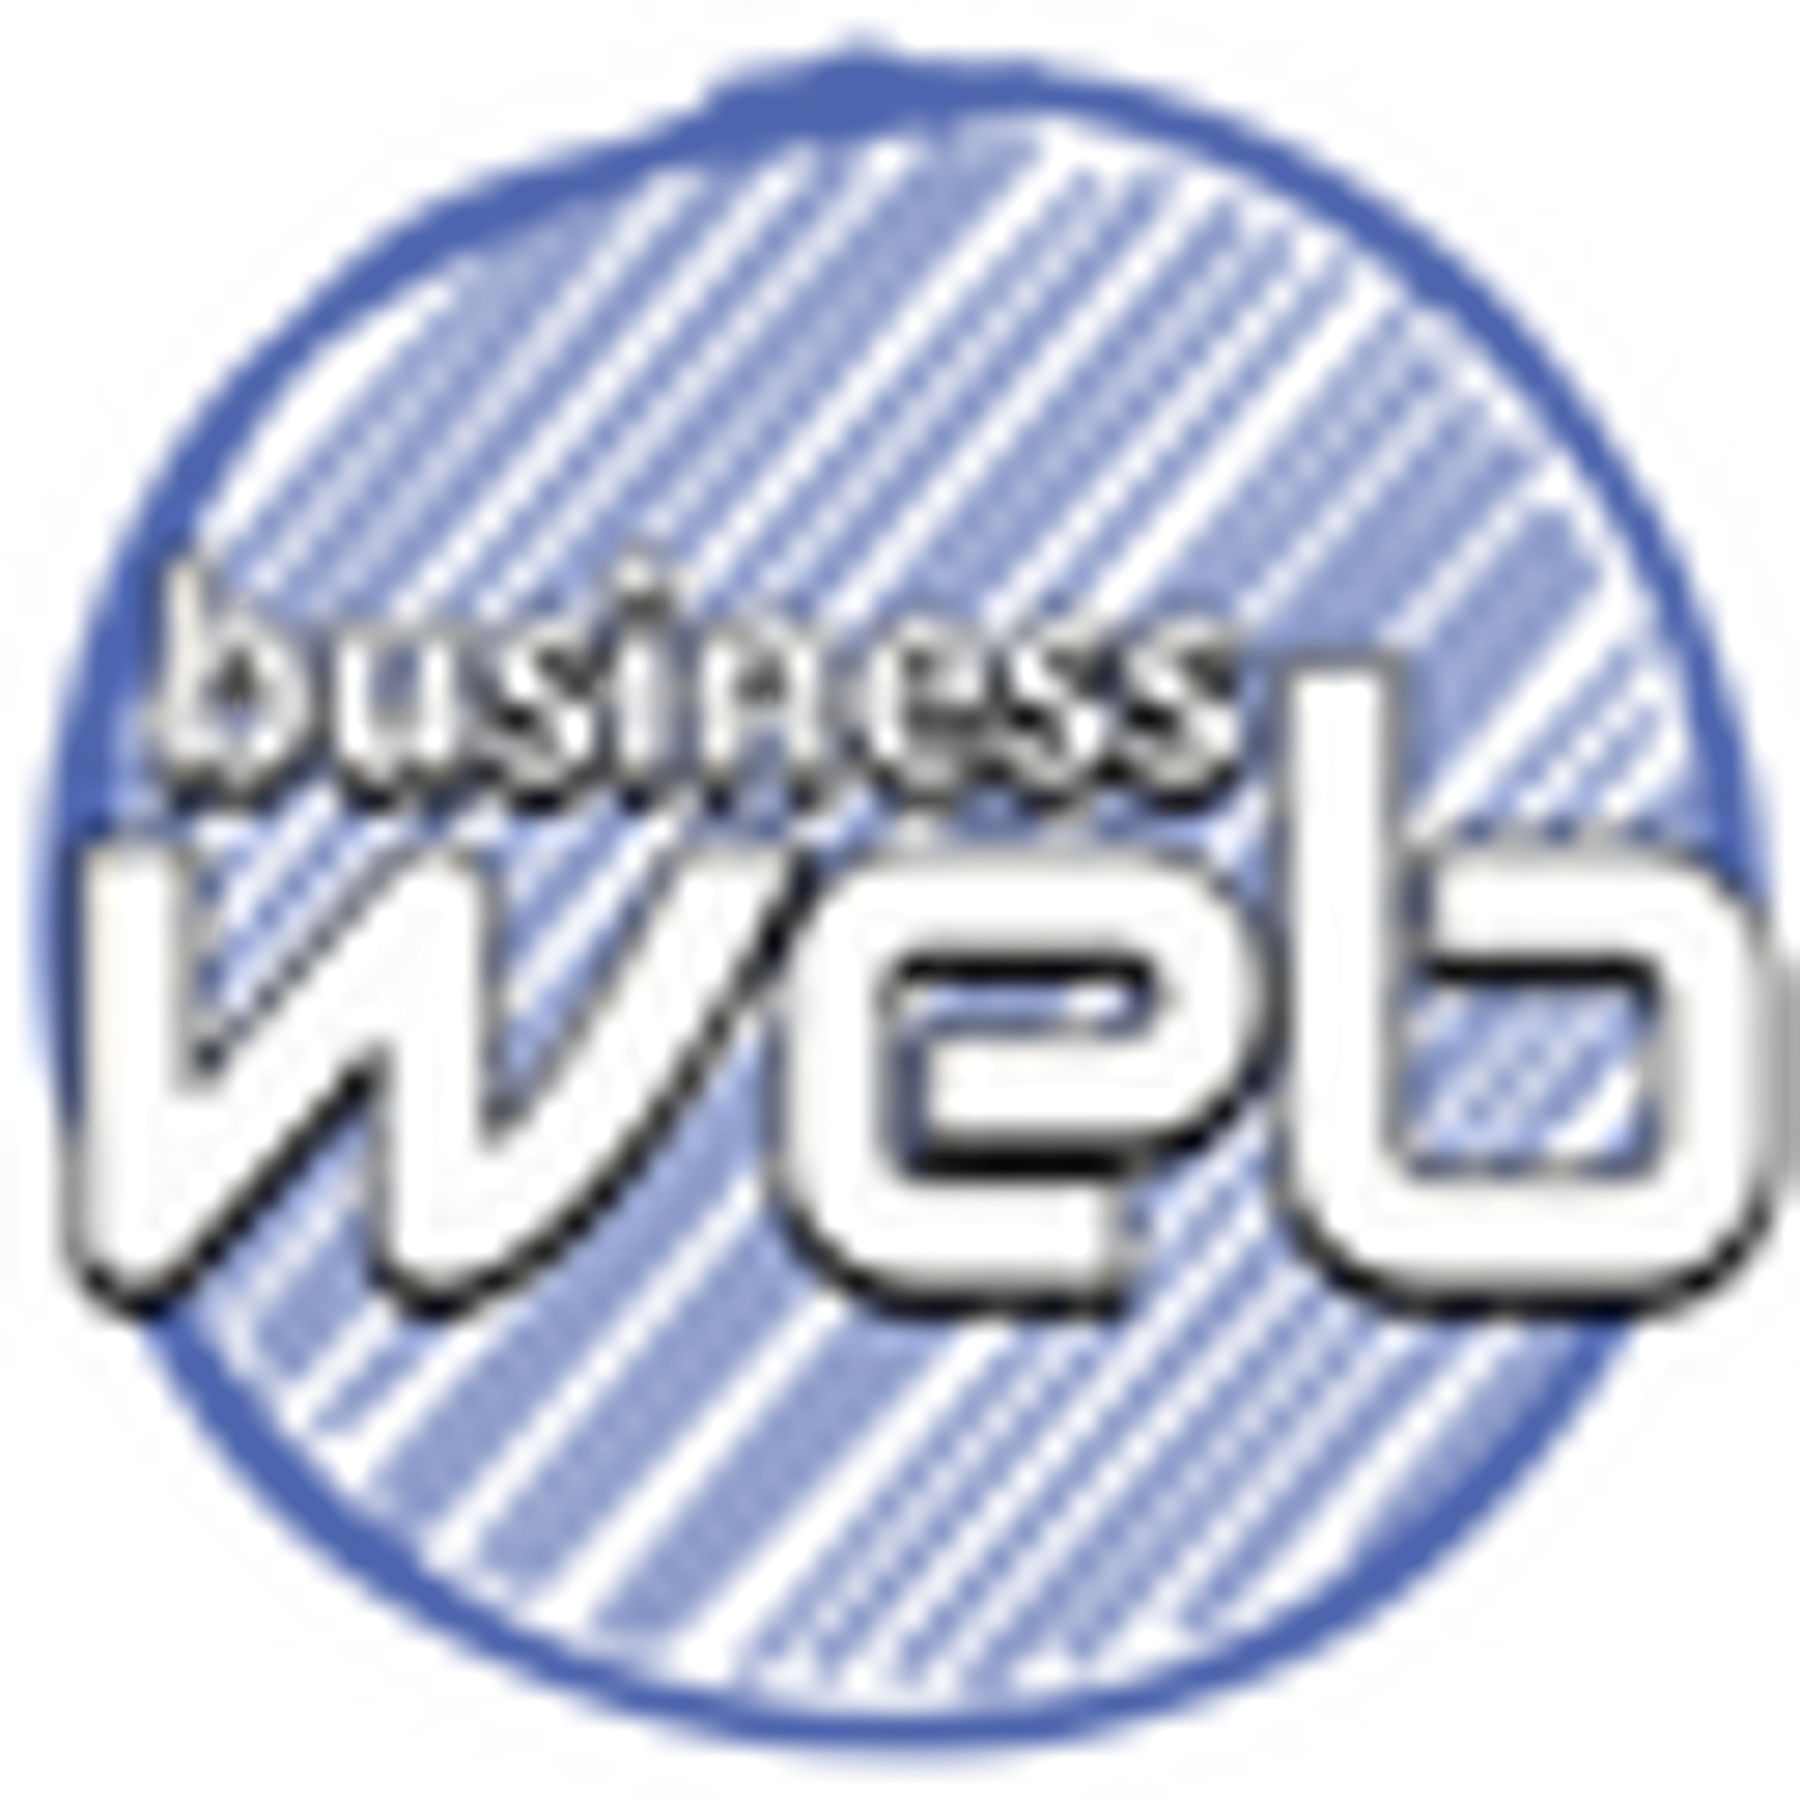 Business Web 🕸️